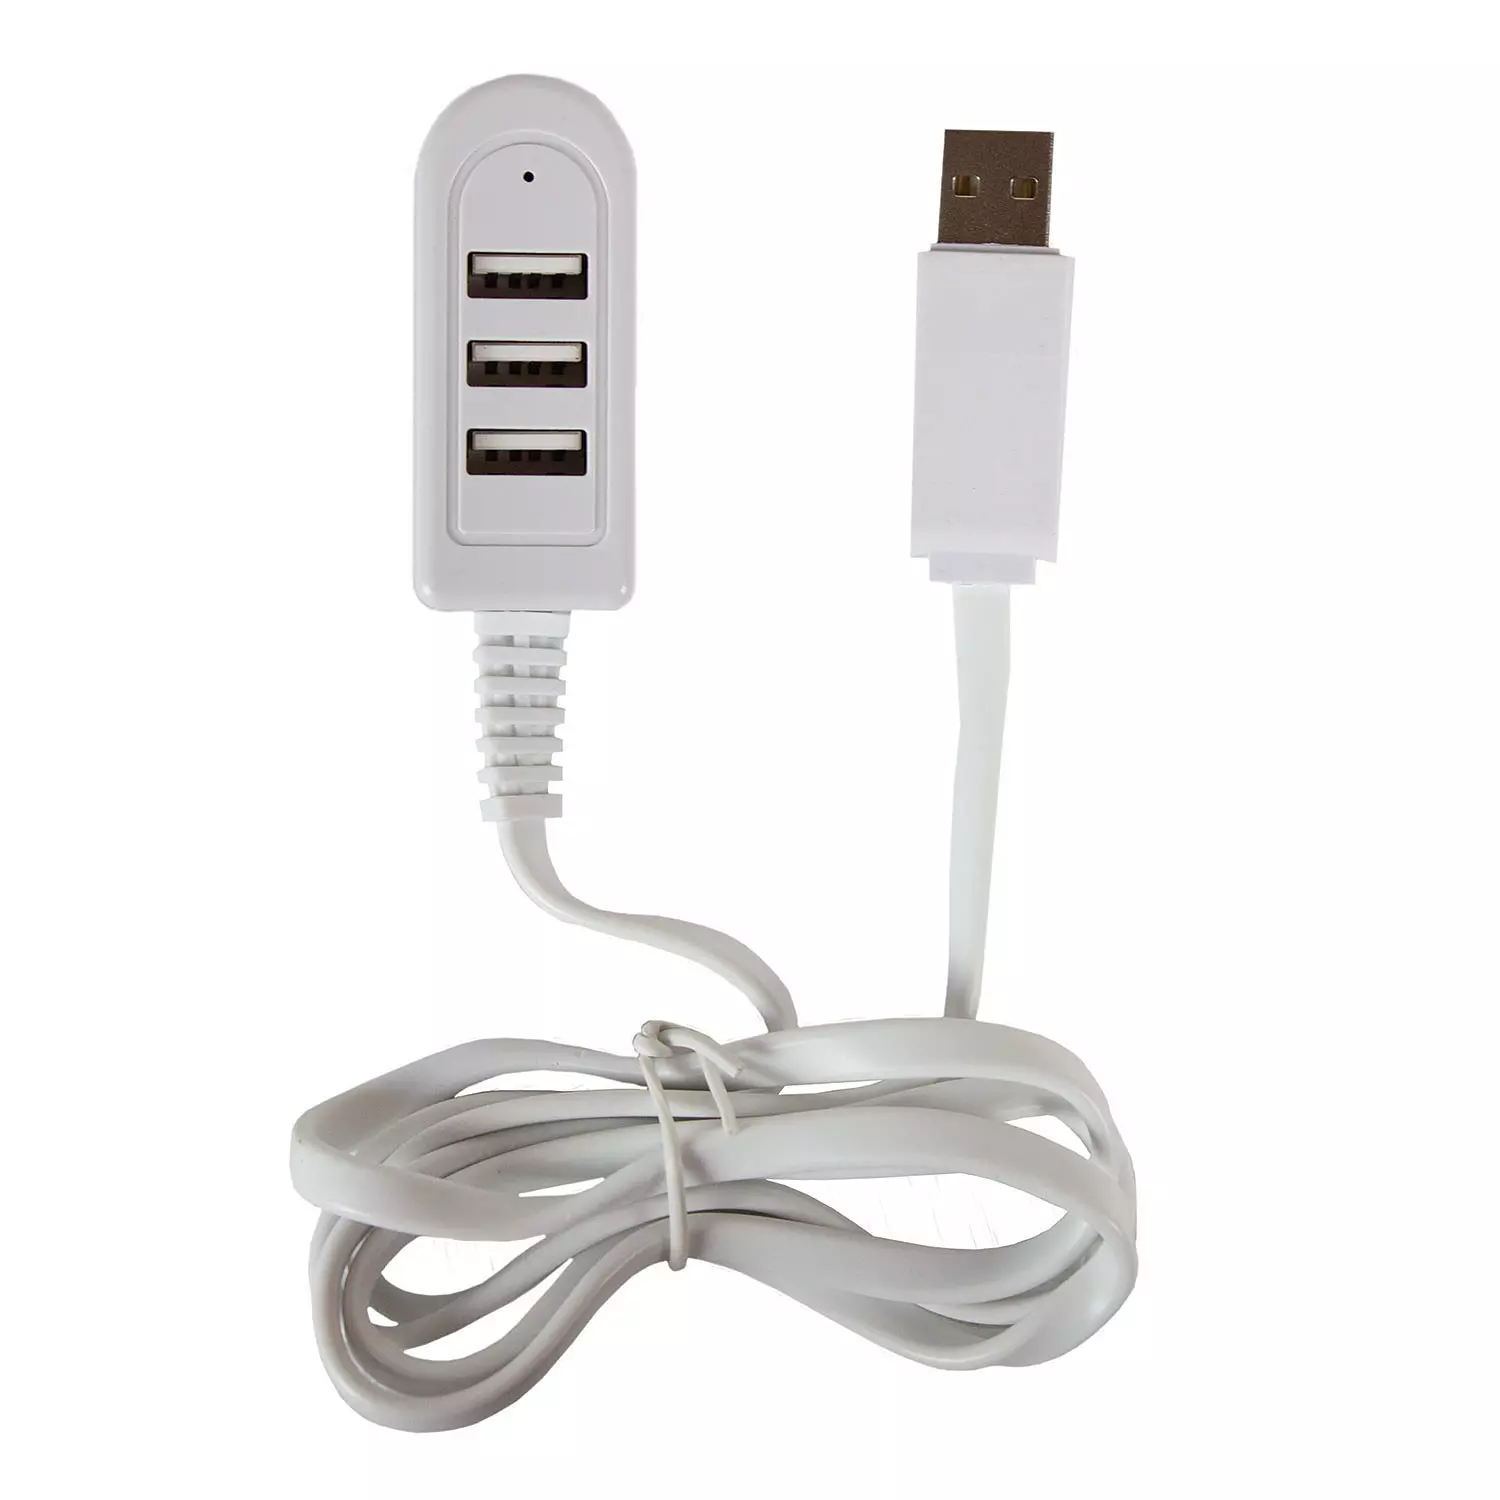 USB 2.0 3-ports hub & charger